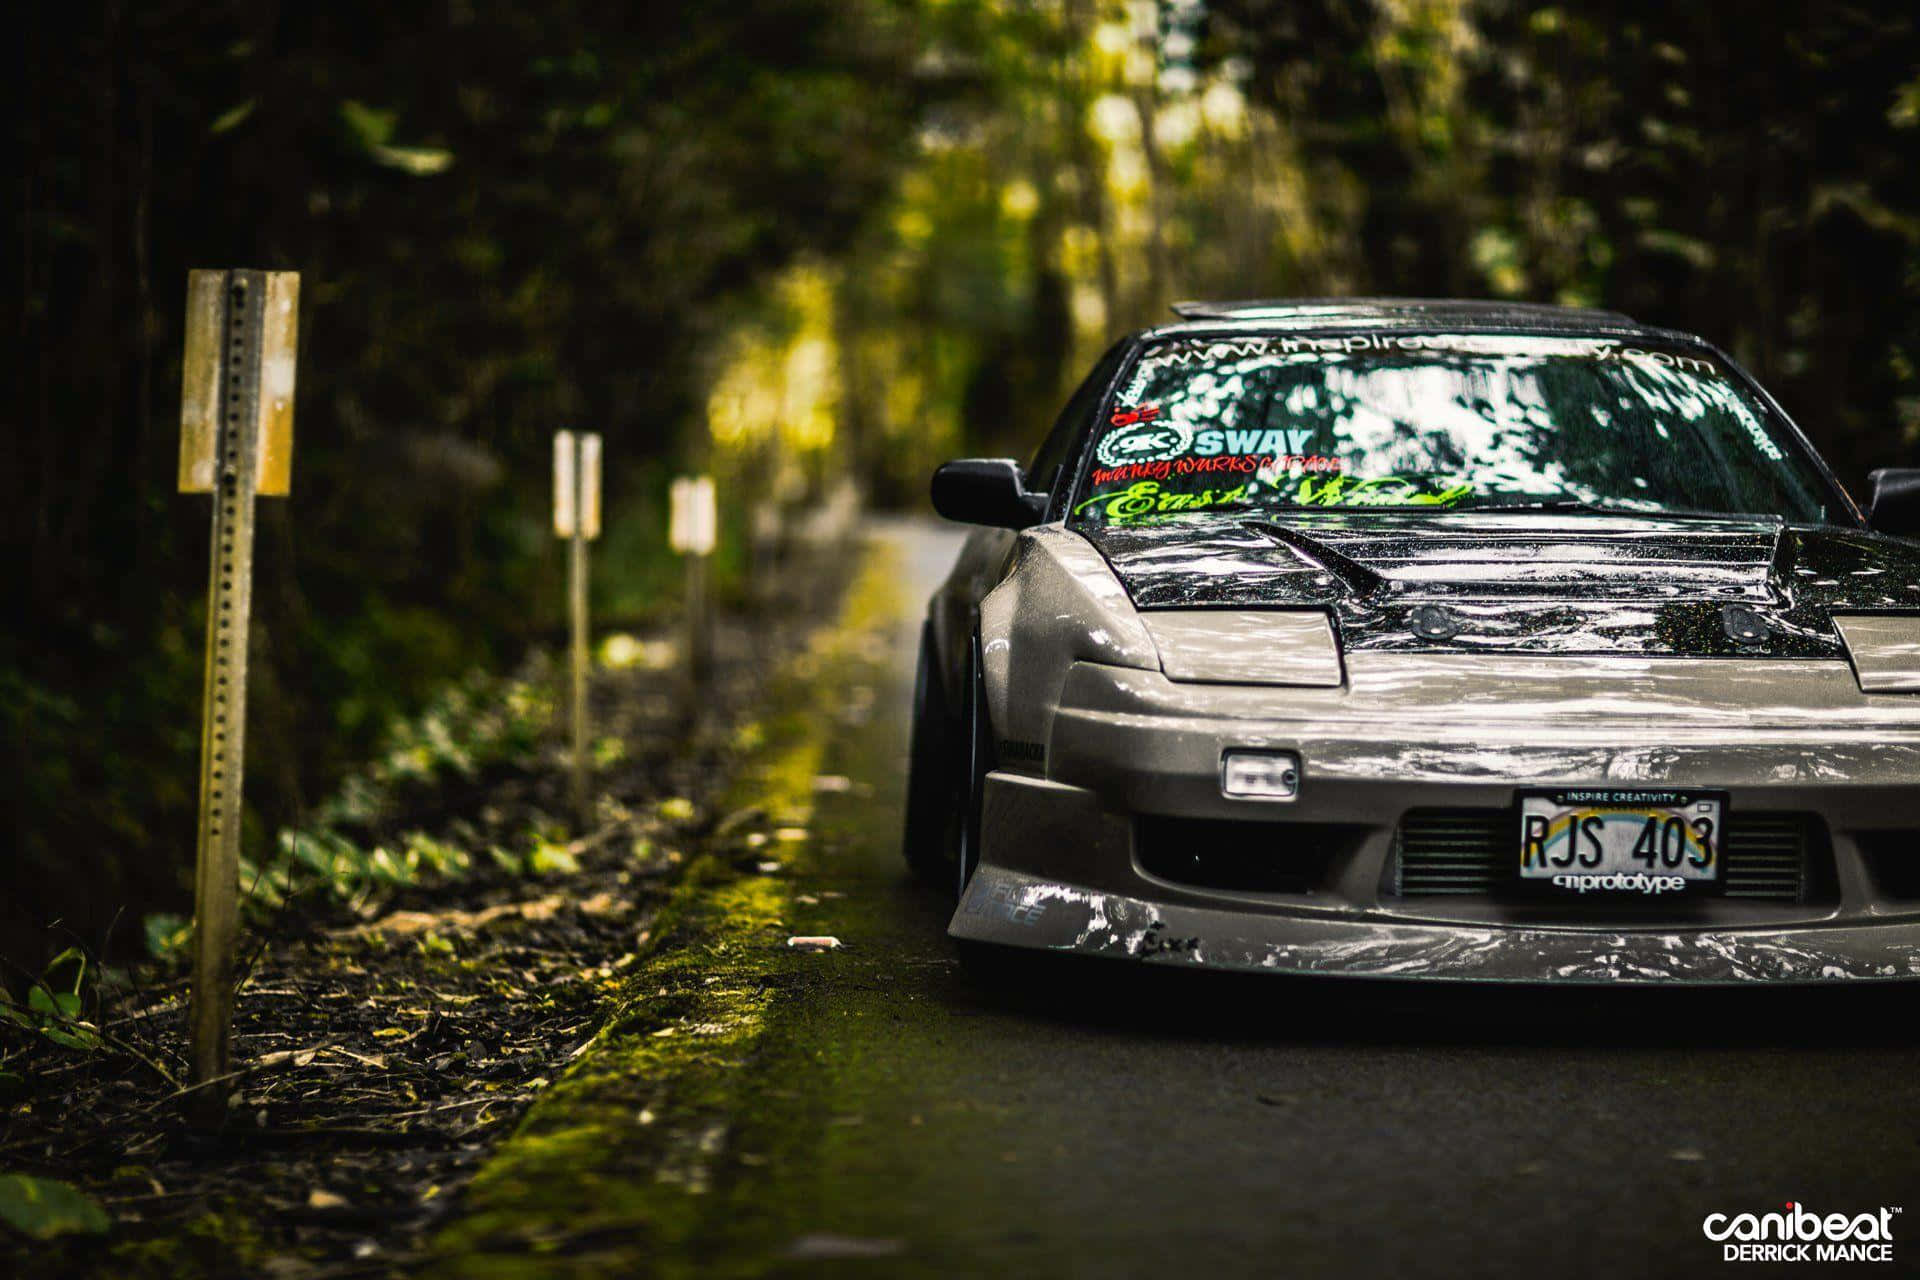 “The Nissan Silvia S13: A High-Performance Sports Car” Wallpaper